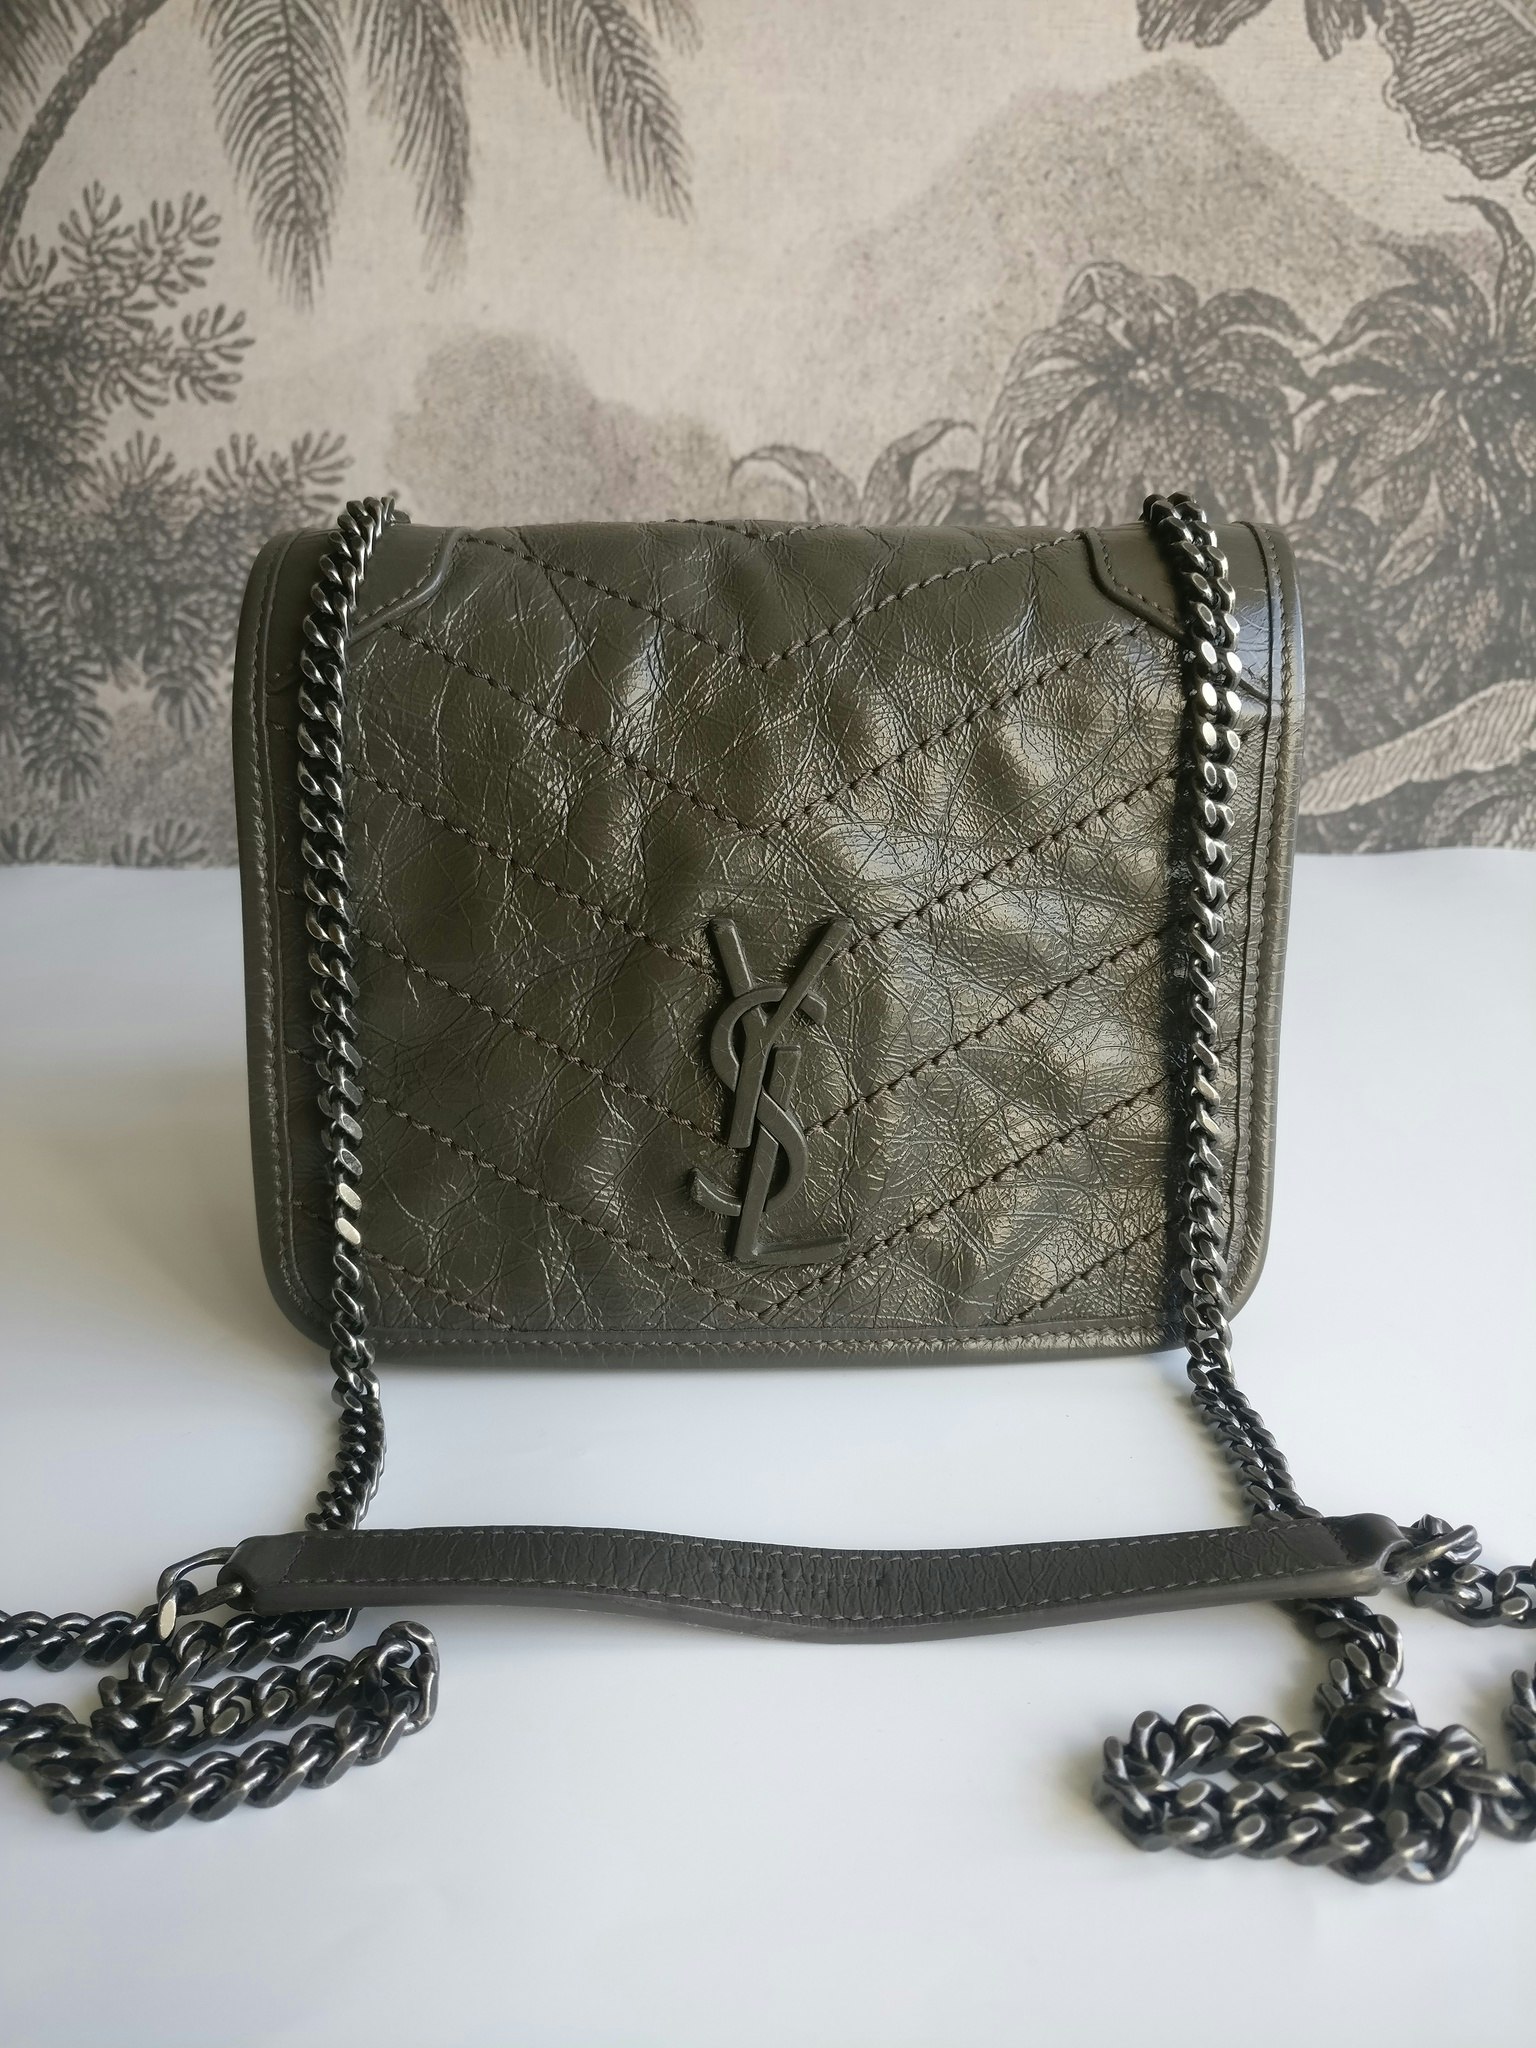 Saint Laurent Niki Chain Wallet - Good or Bag